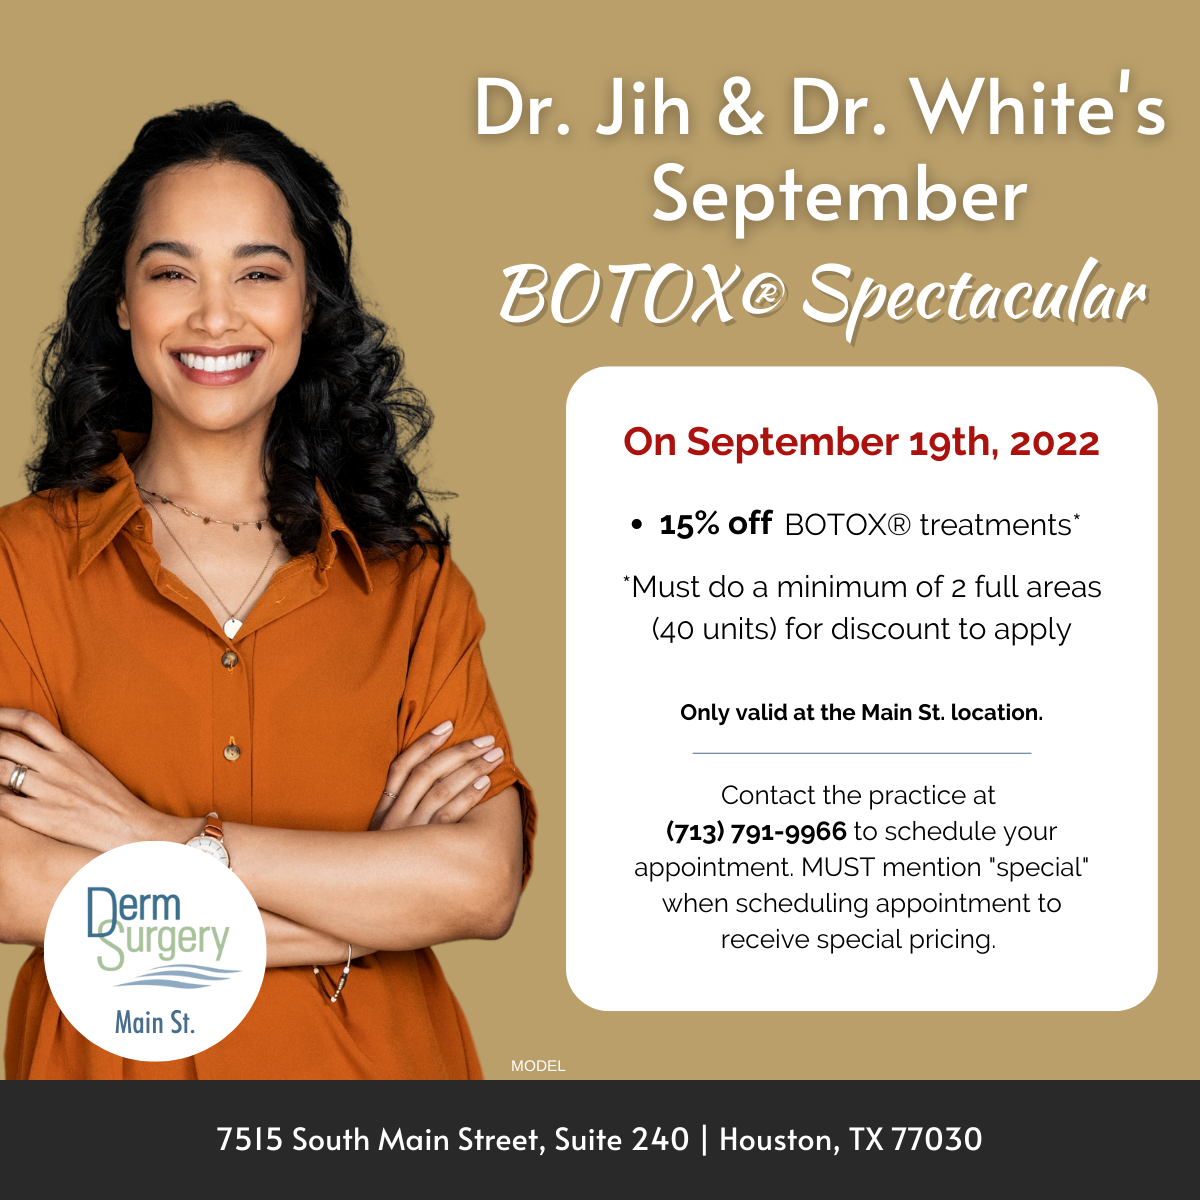 Dr. Jih and Dr. White's September BOTOX® Spectacular